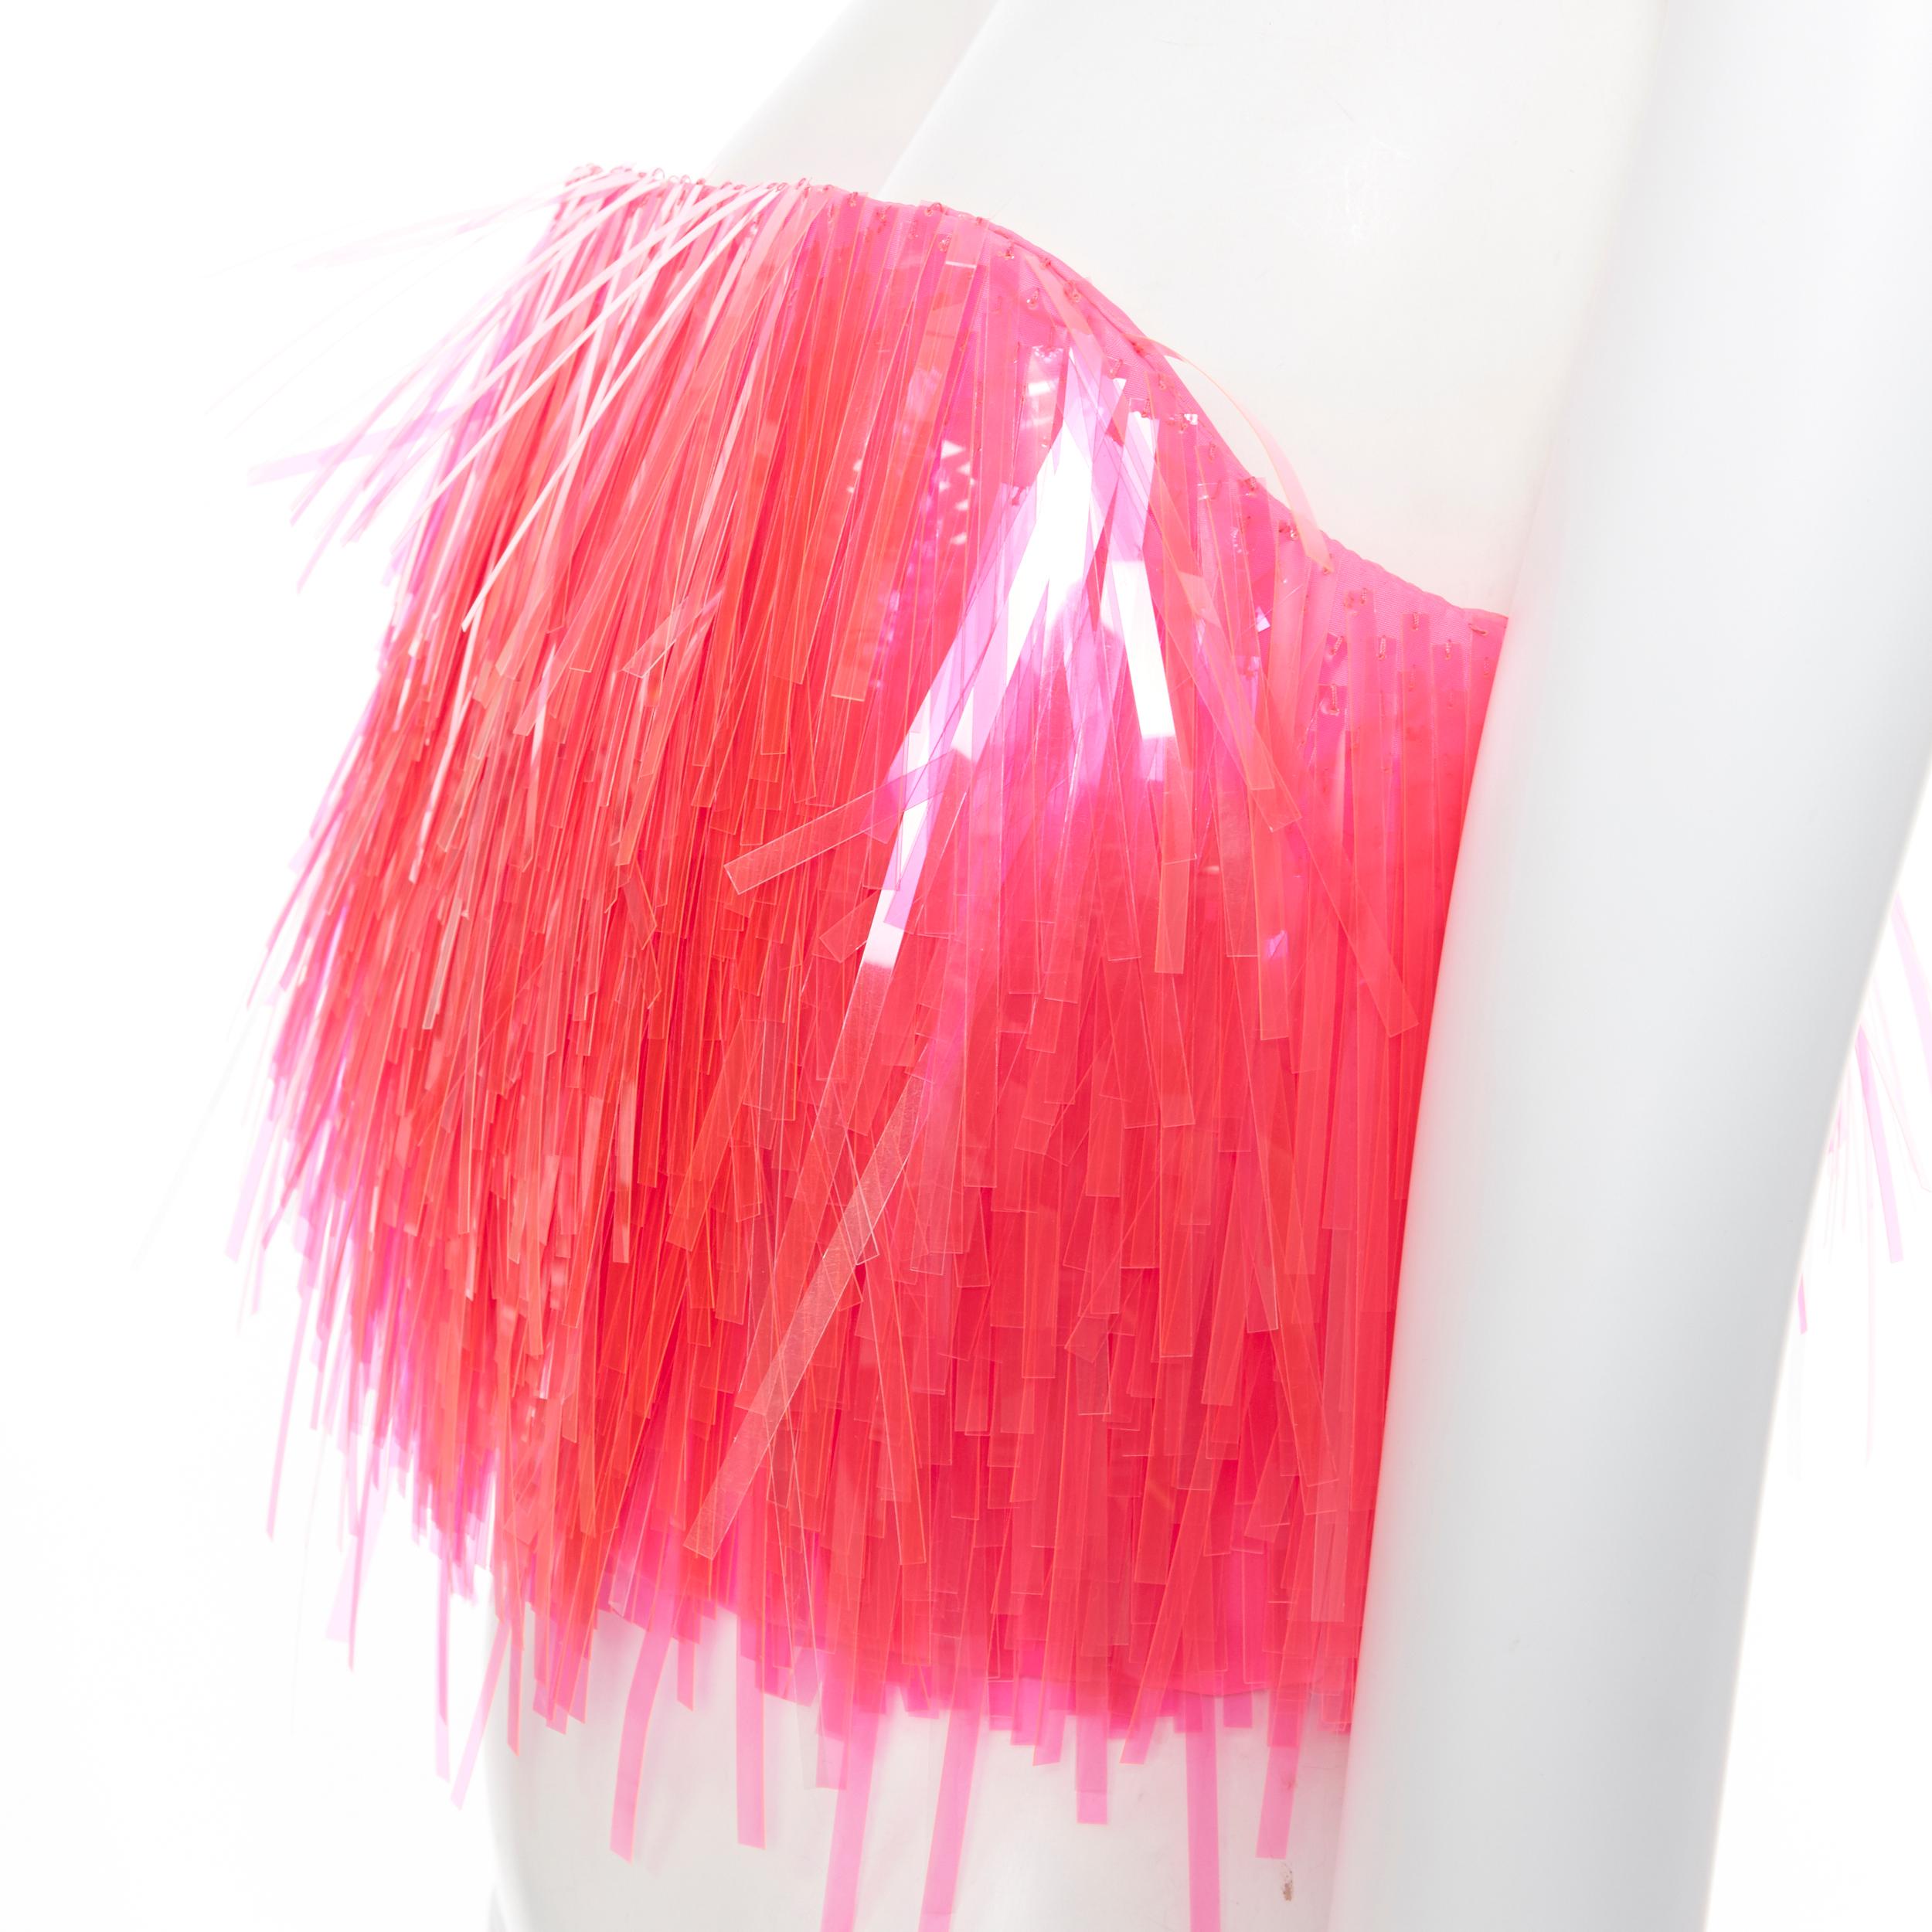 new PRADA 2018 Runway rare neon pink PVC strip tassel fringe bustier top IT40 S
Brand: Prada
Designer: Miuccia Prada
Collection: Fall Winter 2018
Model Name / Style: Tube top
Material: PVC
Color: Pink
Pattern: Solid
Closure: Zip
Extra Detail: Iconic